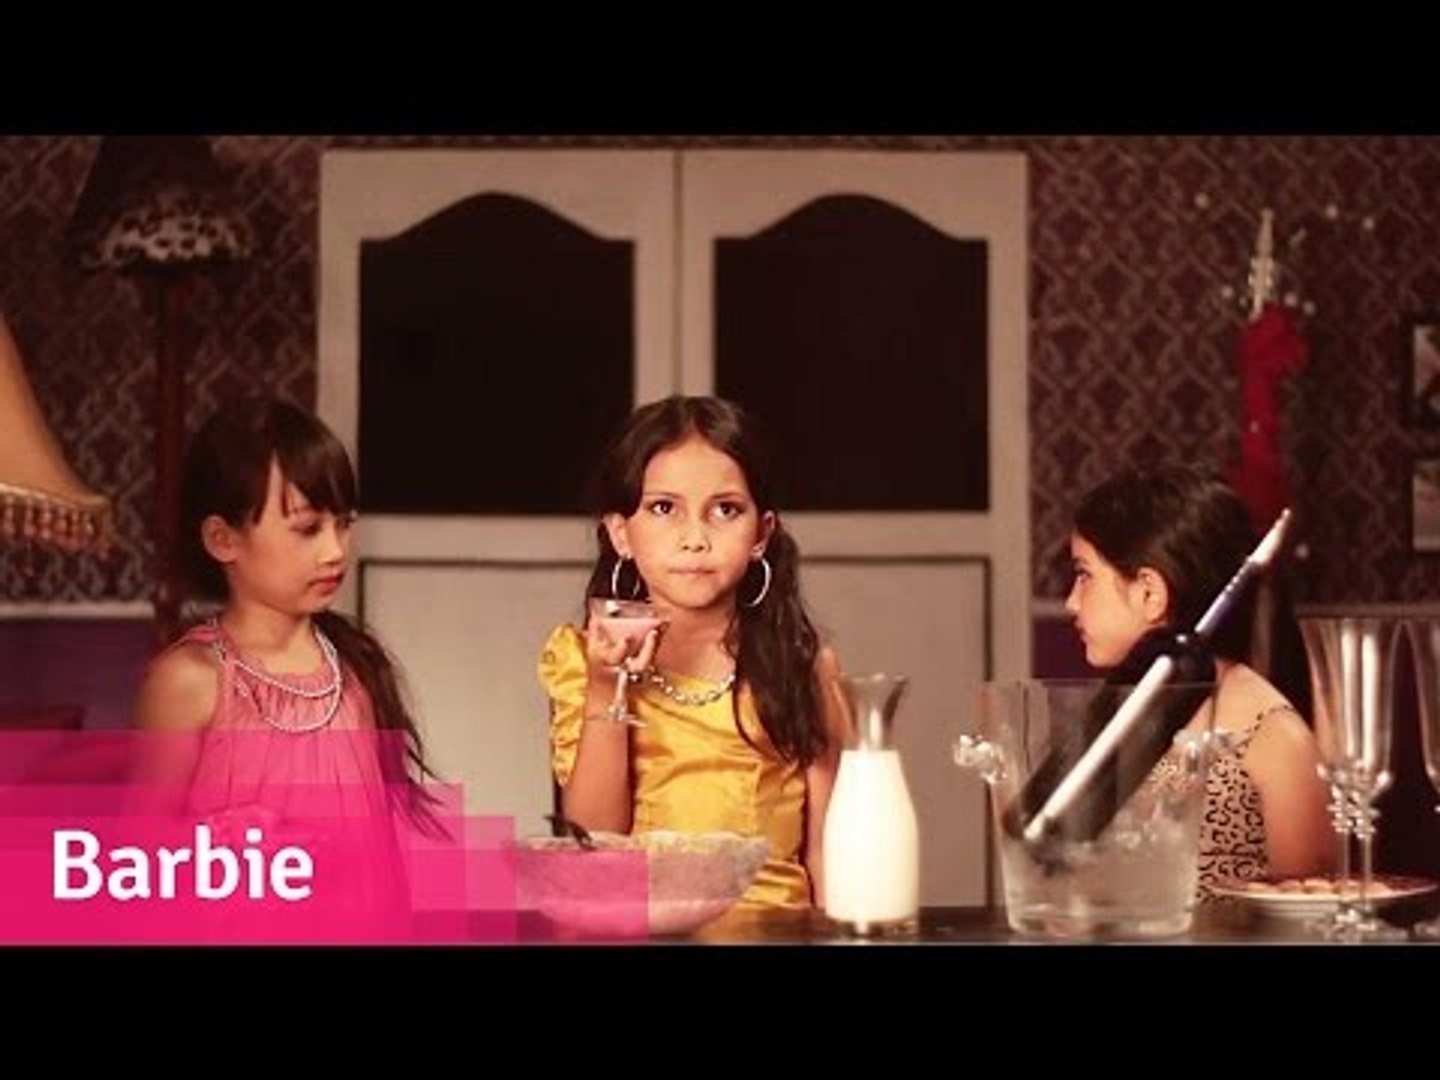 Barbie - Indonesia Drama Short Film // Viddsee.com